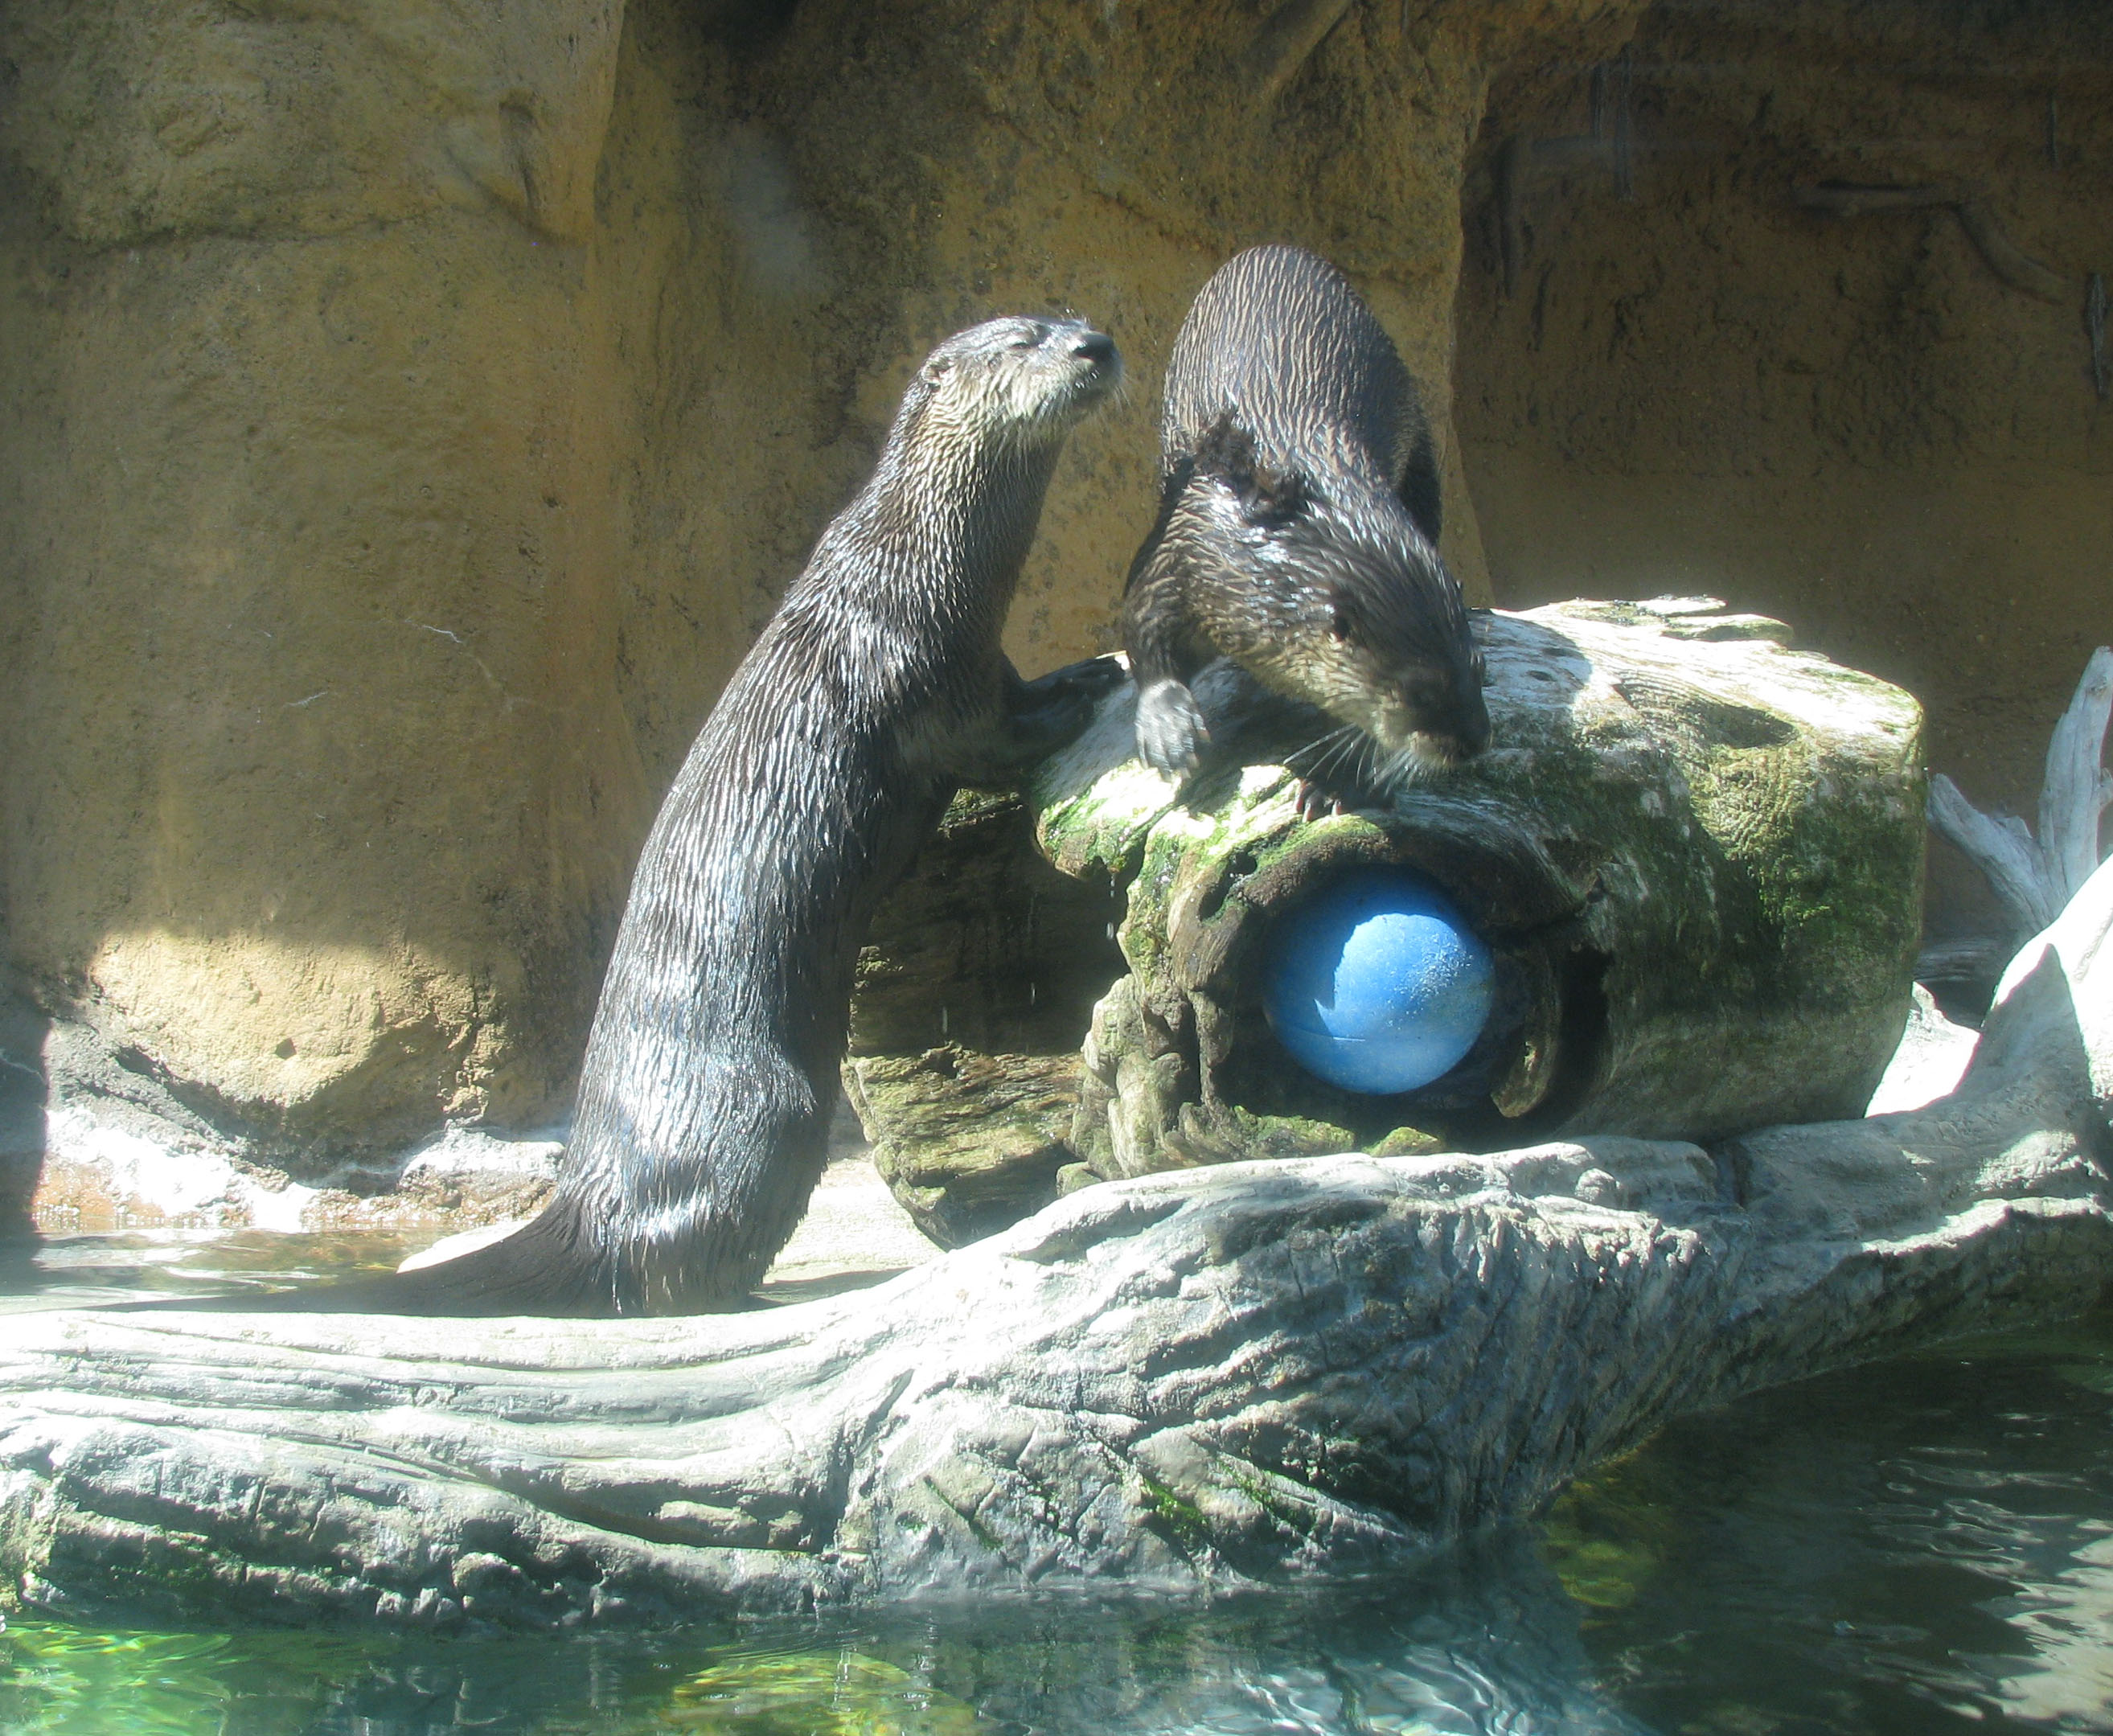 Photo Calvert Marine Museum - Otters in habitat